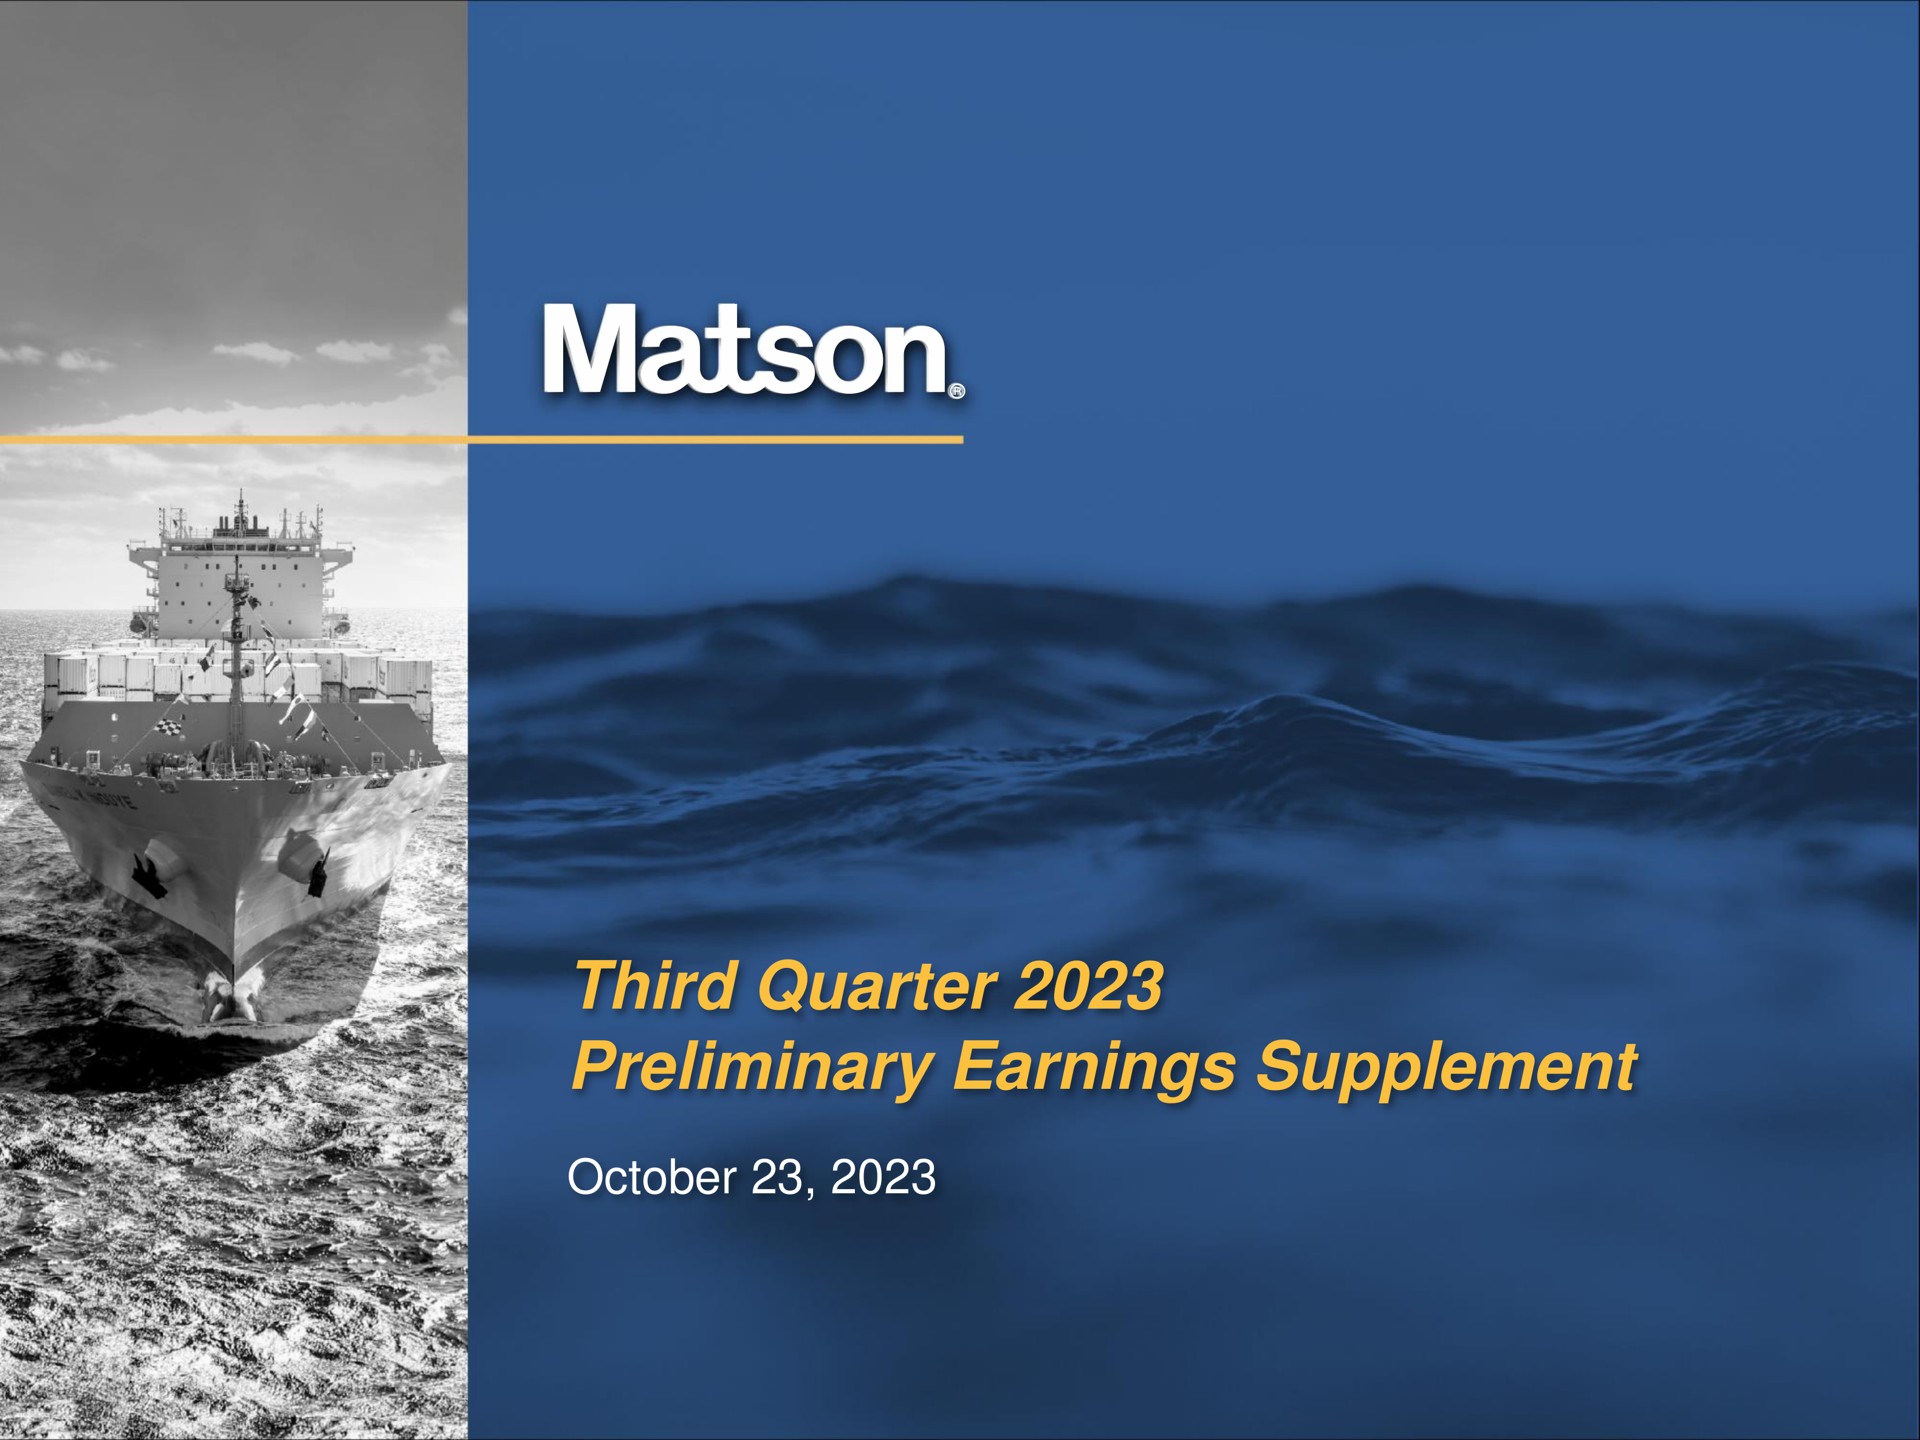 third quarter preliminary earnings supplement | Matson